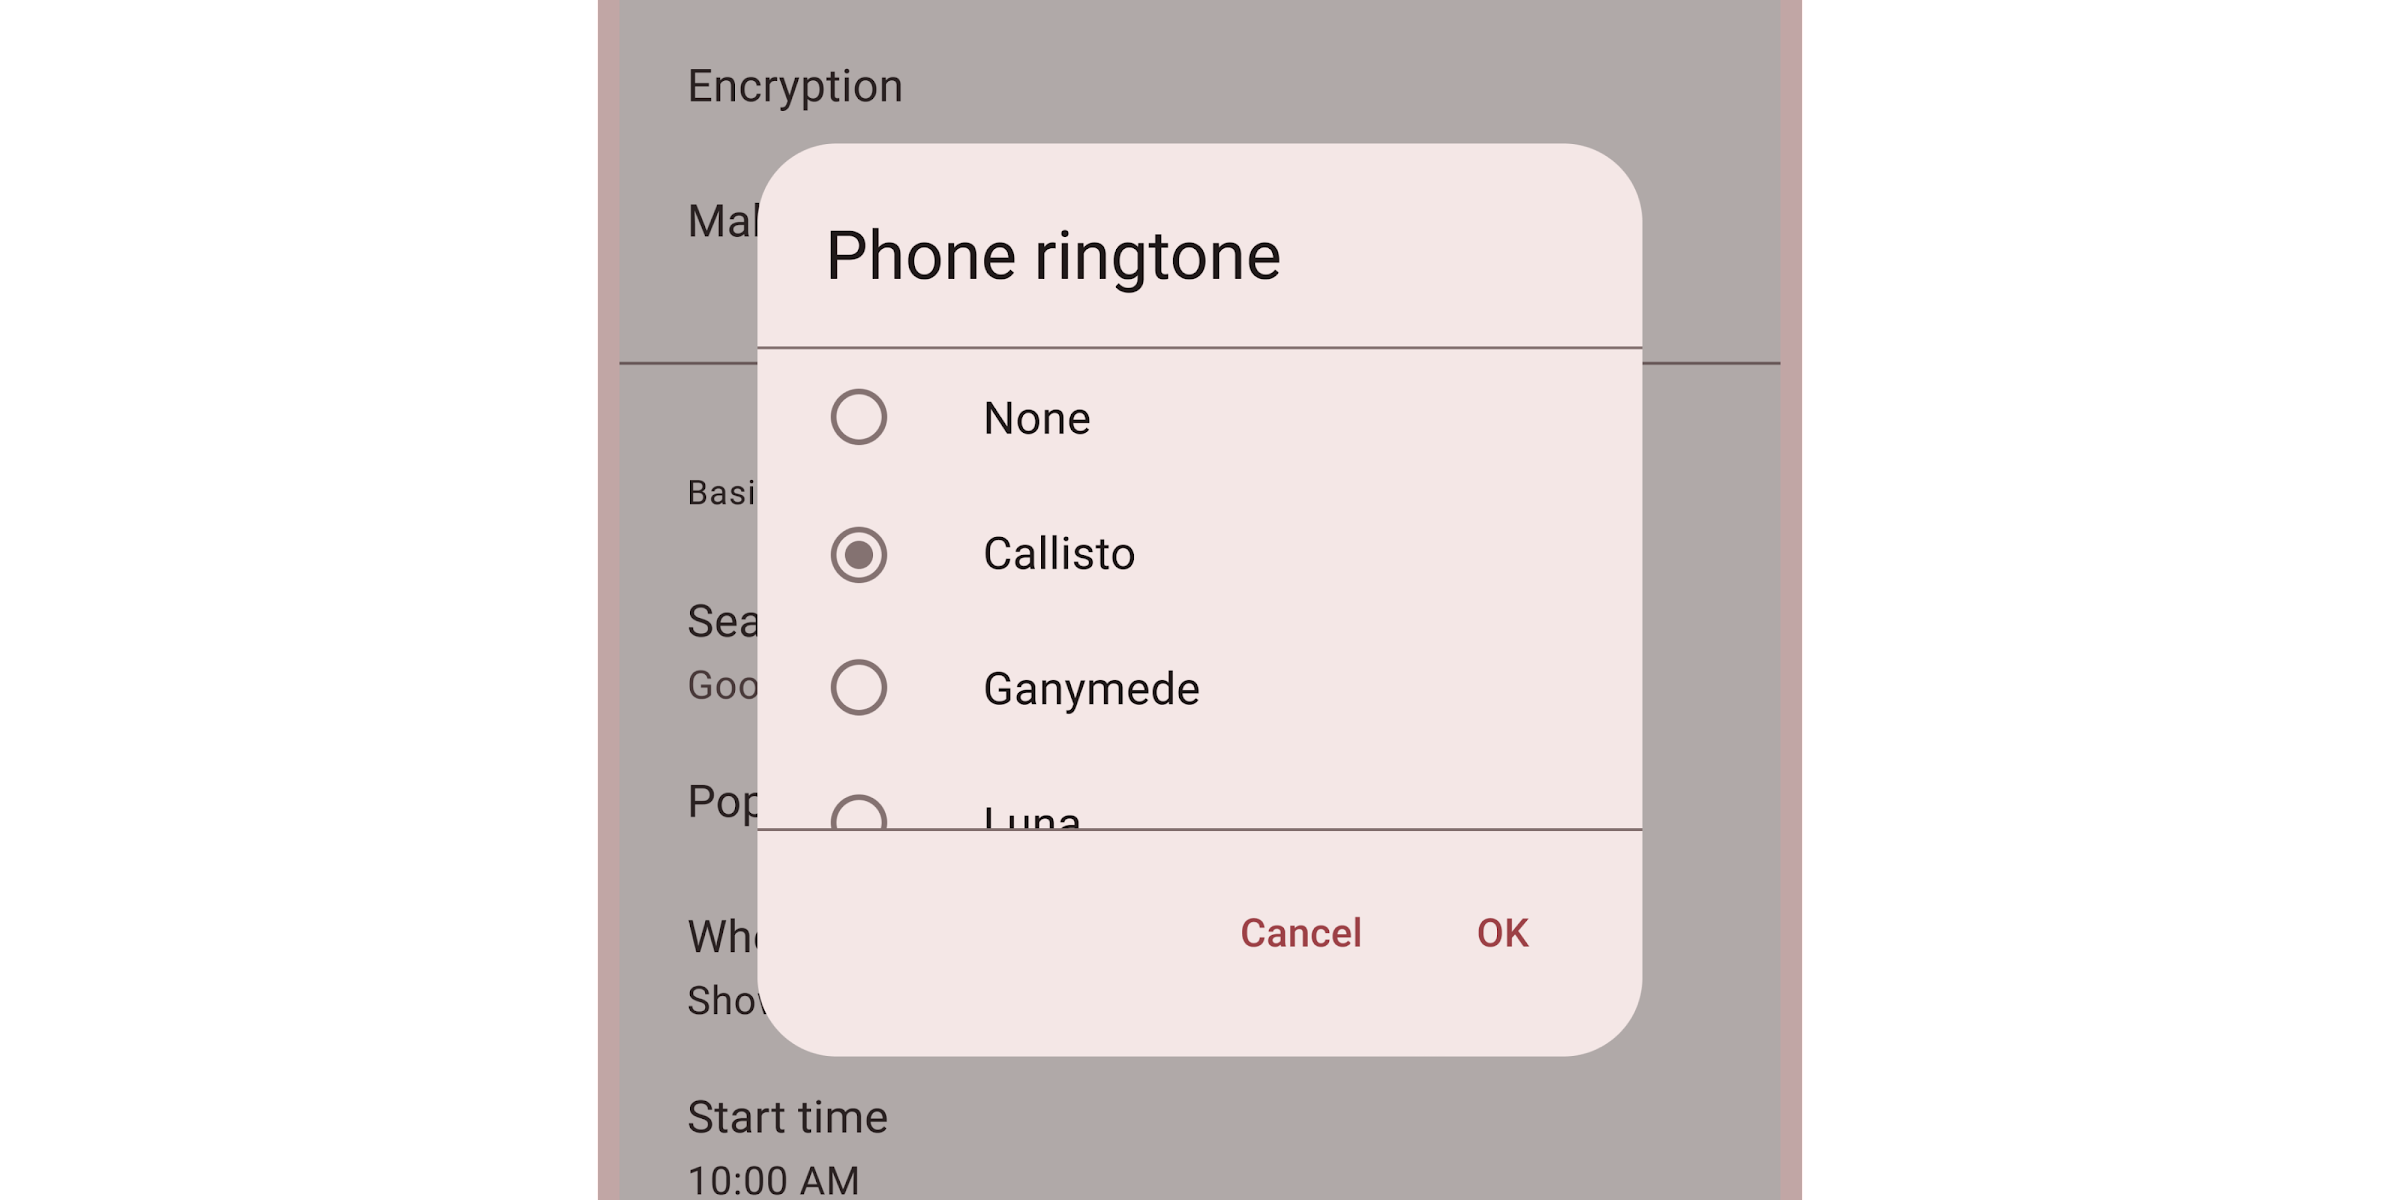 A dialog displaying phone ringtone options.